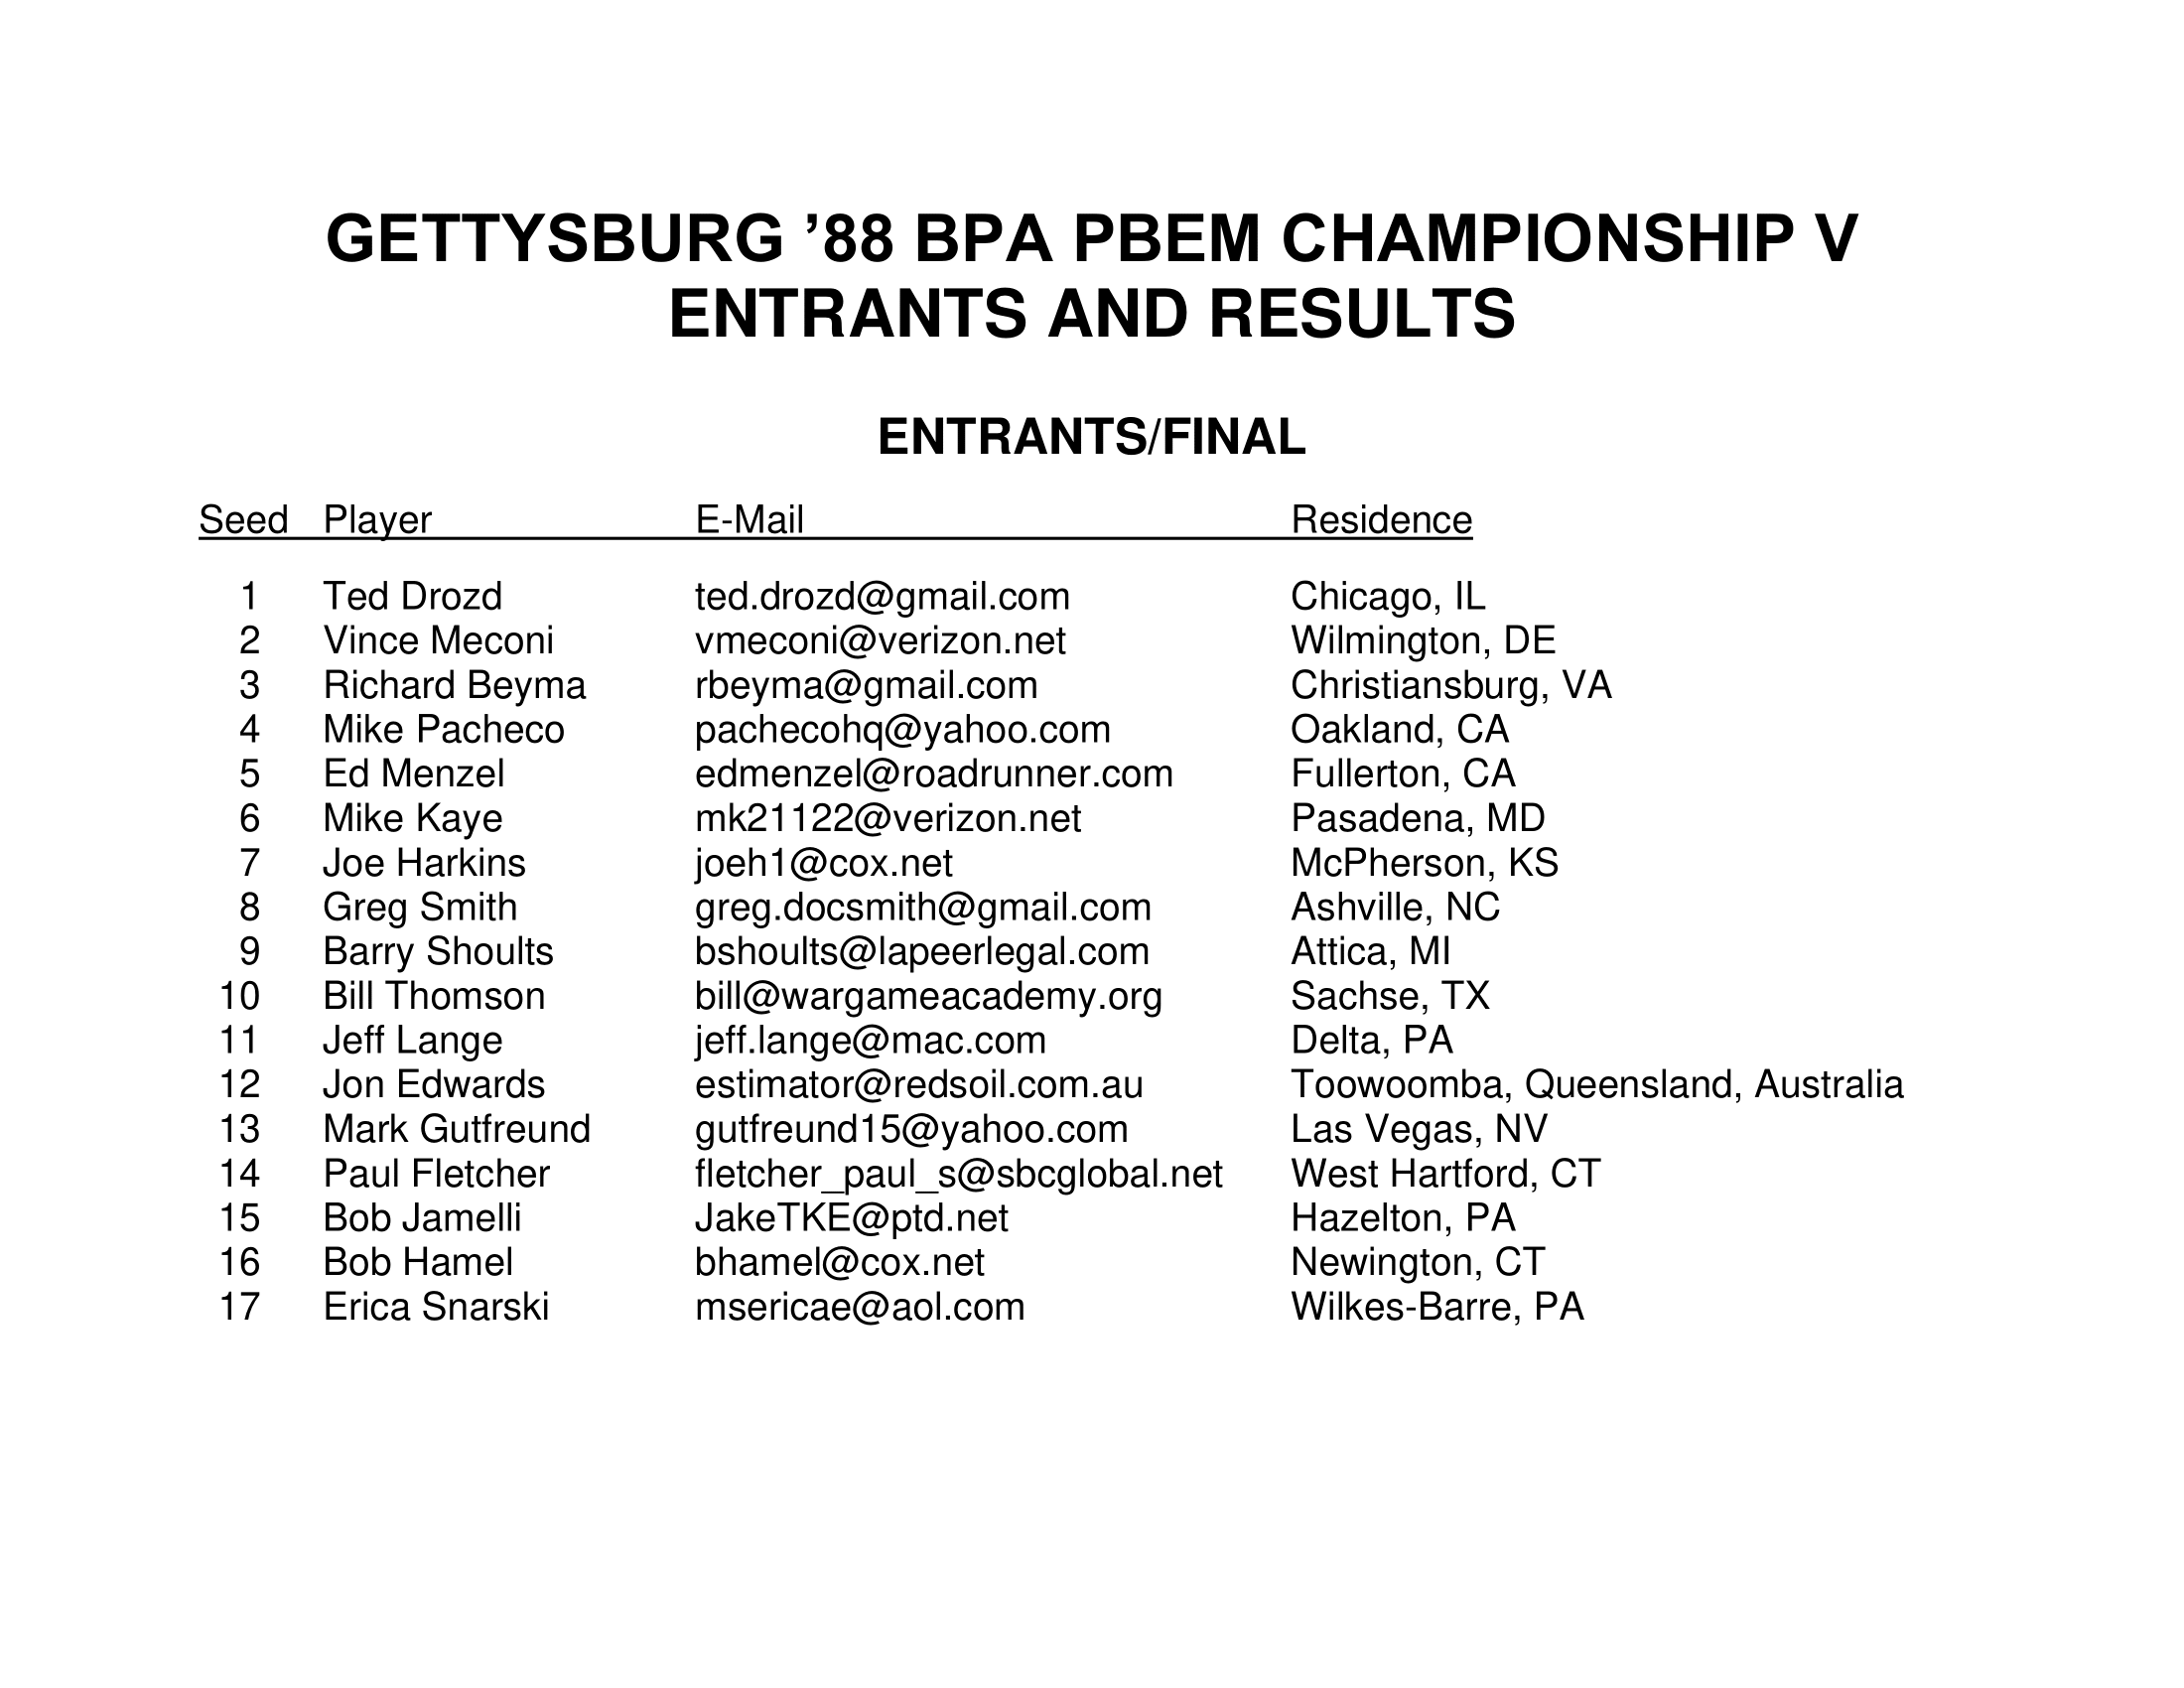 GBG-PBEM-V-Entrants-Results-1